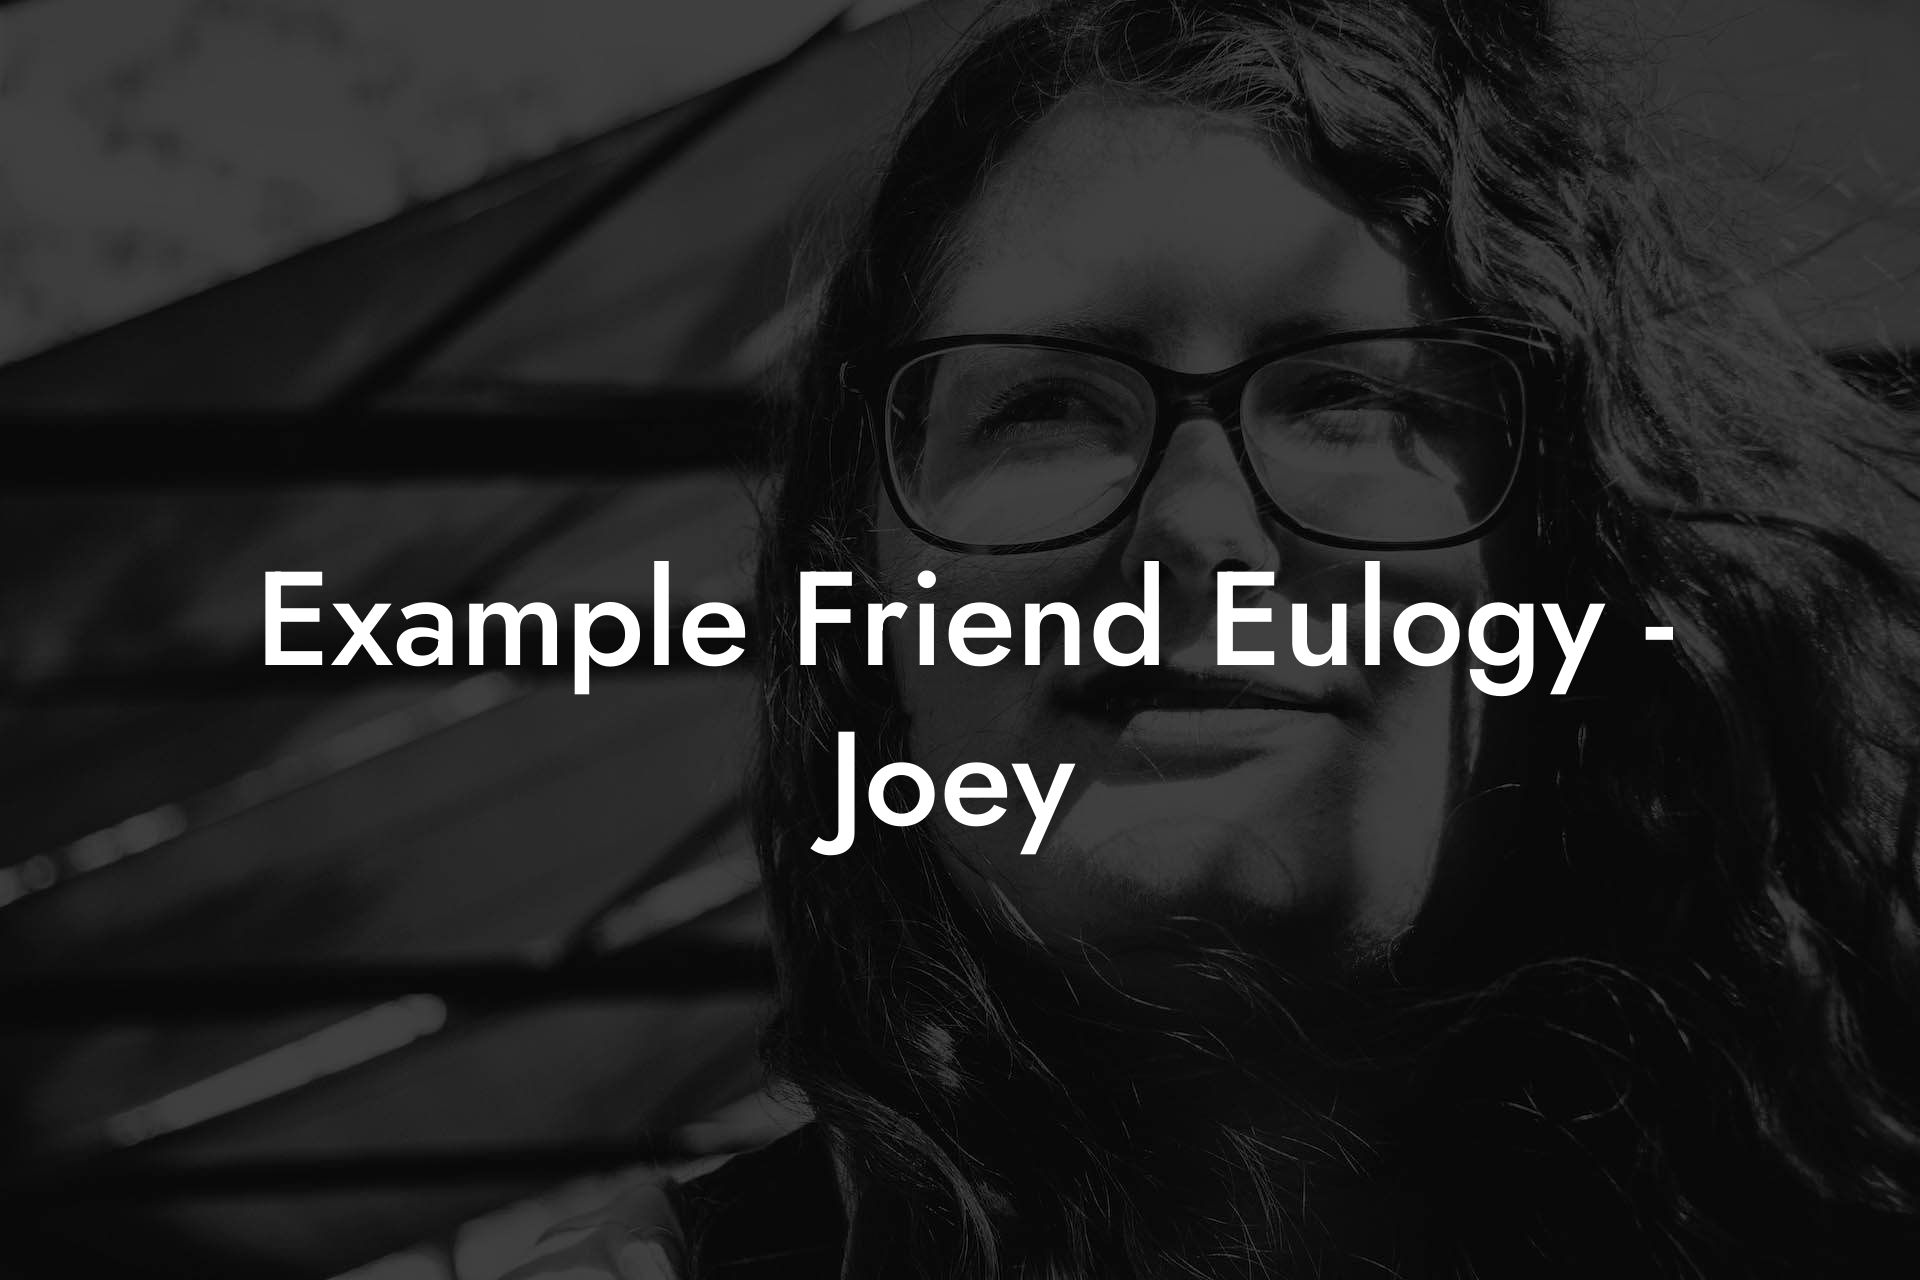 Example Friend Eulogy - Joey